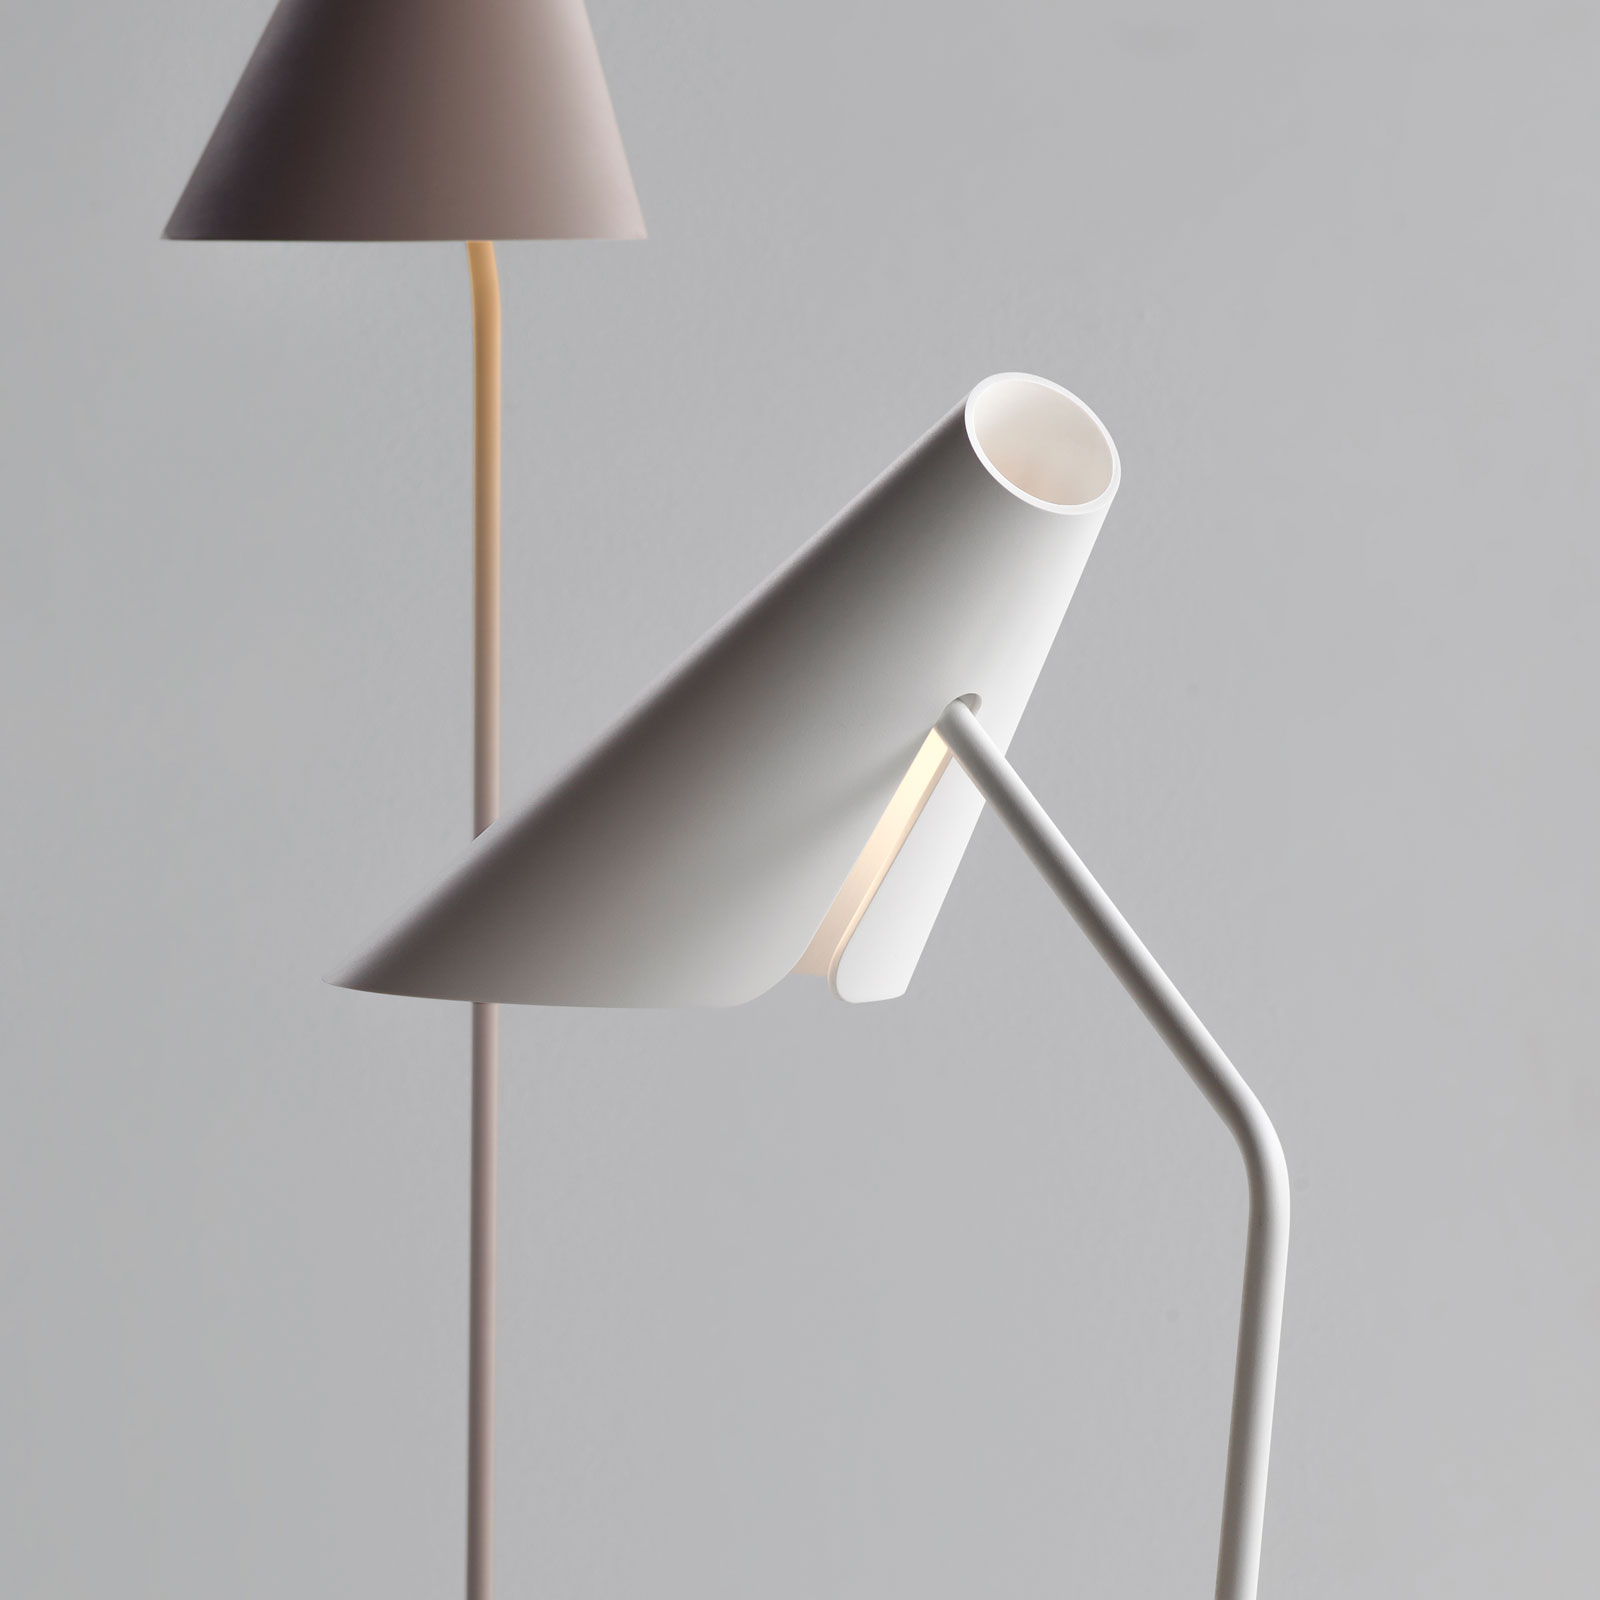 Vibia I.Cono 0712 designer floor lamp, white